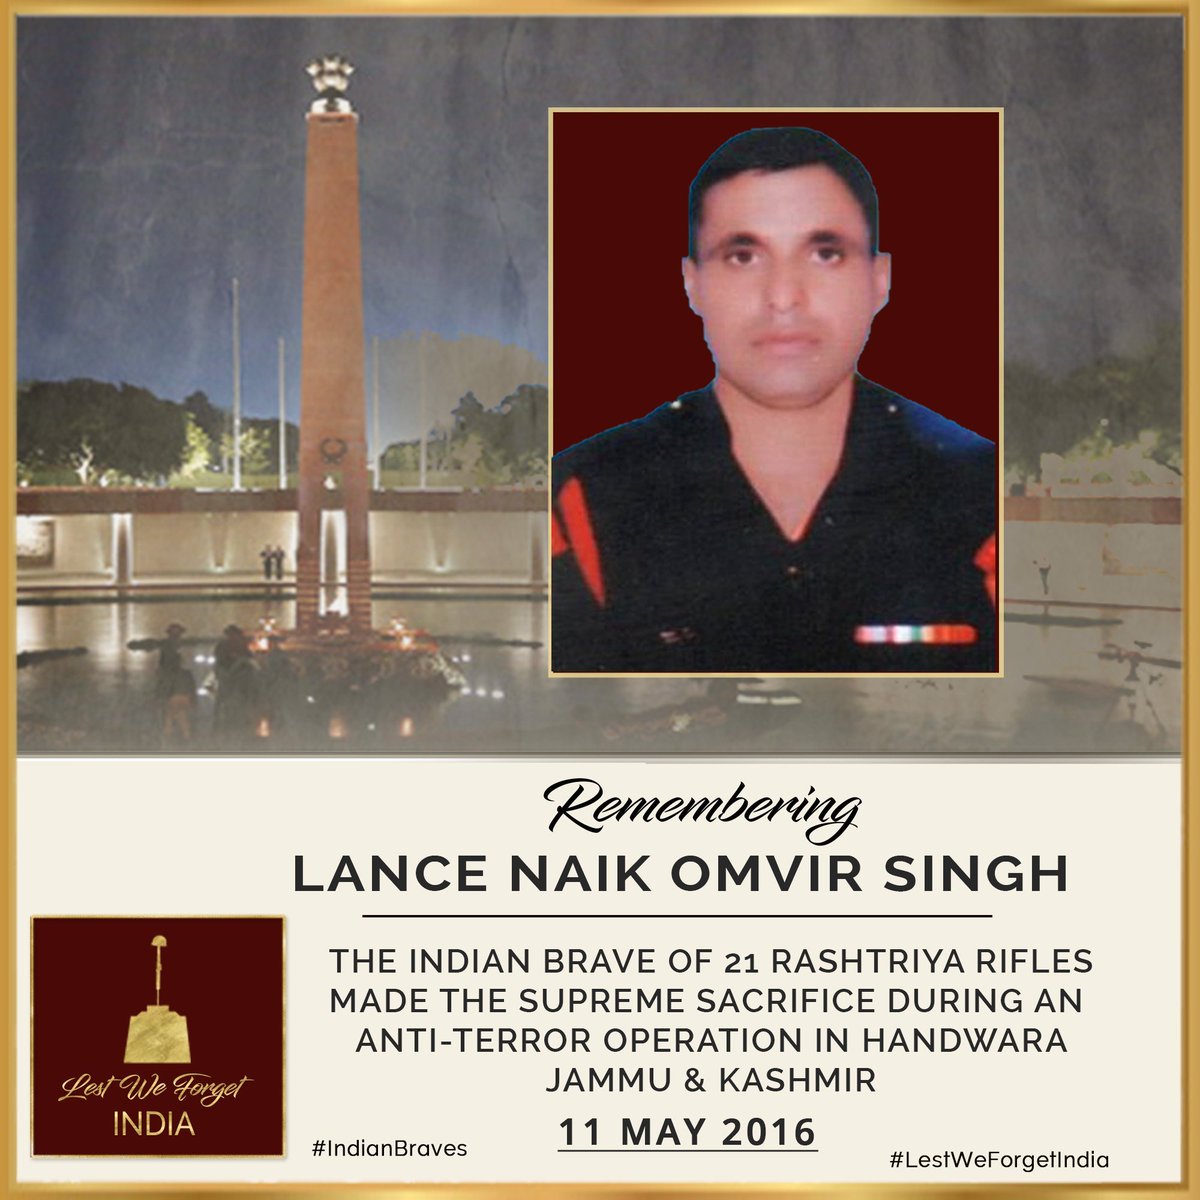 Our unknown & unsung #IndianBraves - #LestWeForgetIndia🇮🇳 L/Nk Omvir Singh, 18 GUARDS/ 21 #RashtriyaRifles made the supreme sacrifice #OnThisDay 11 May in 2016, during an anti-terror operation in Handwara, Jammu & Kashmir.